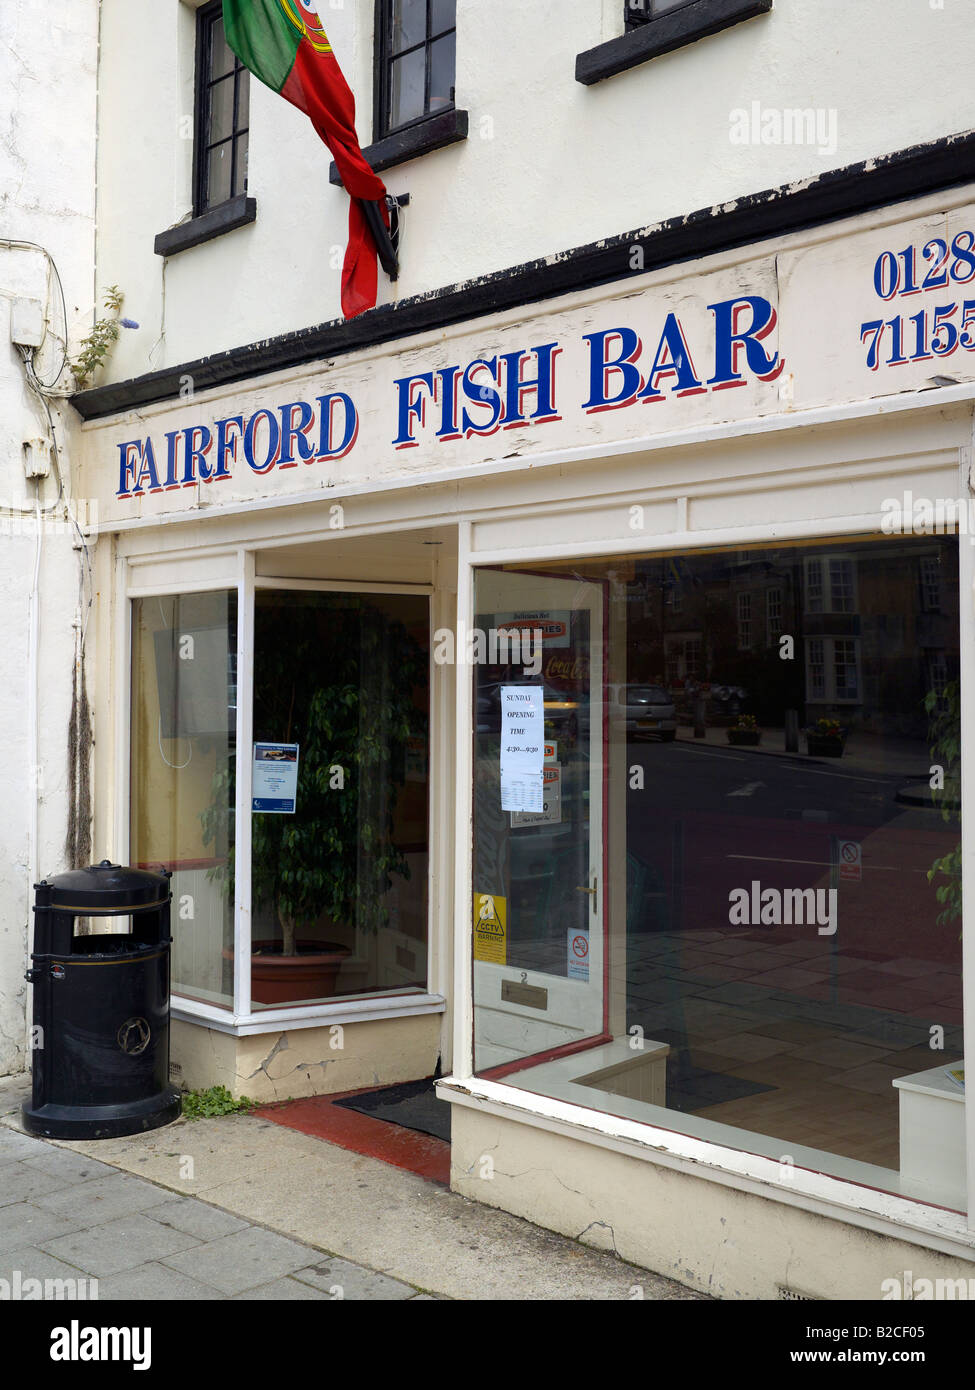 Fairford Fish Bar Stock Photo